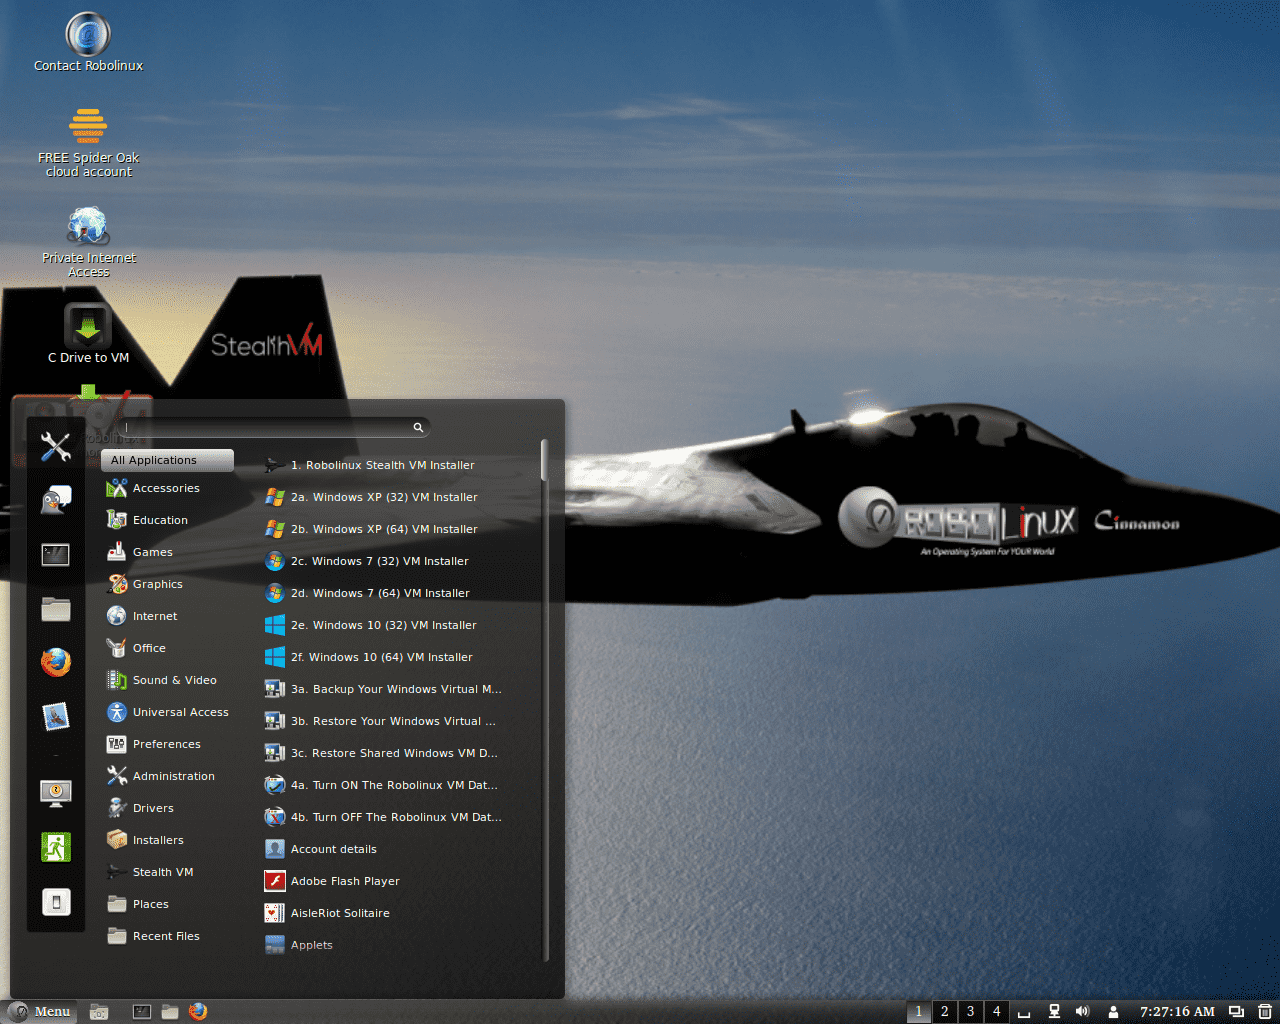 windows xp emulator for ubuntu 17.10